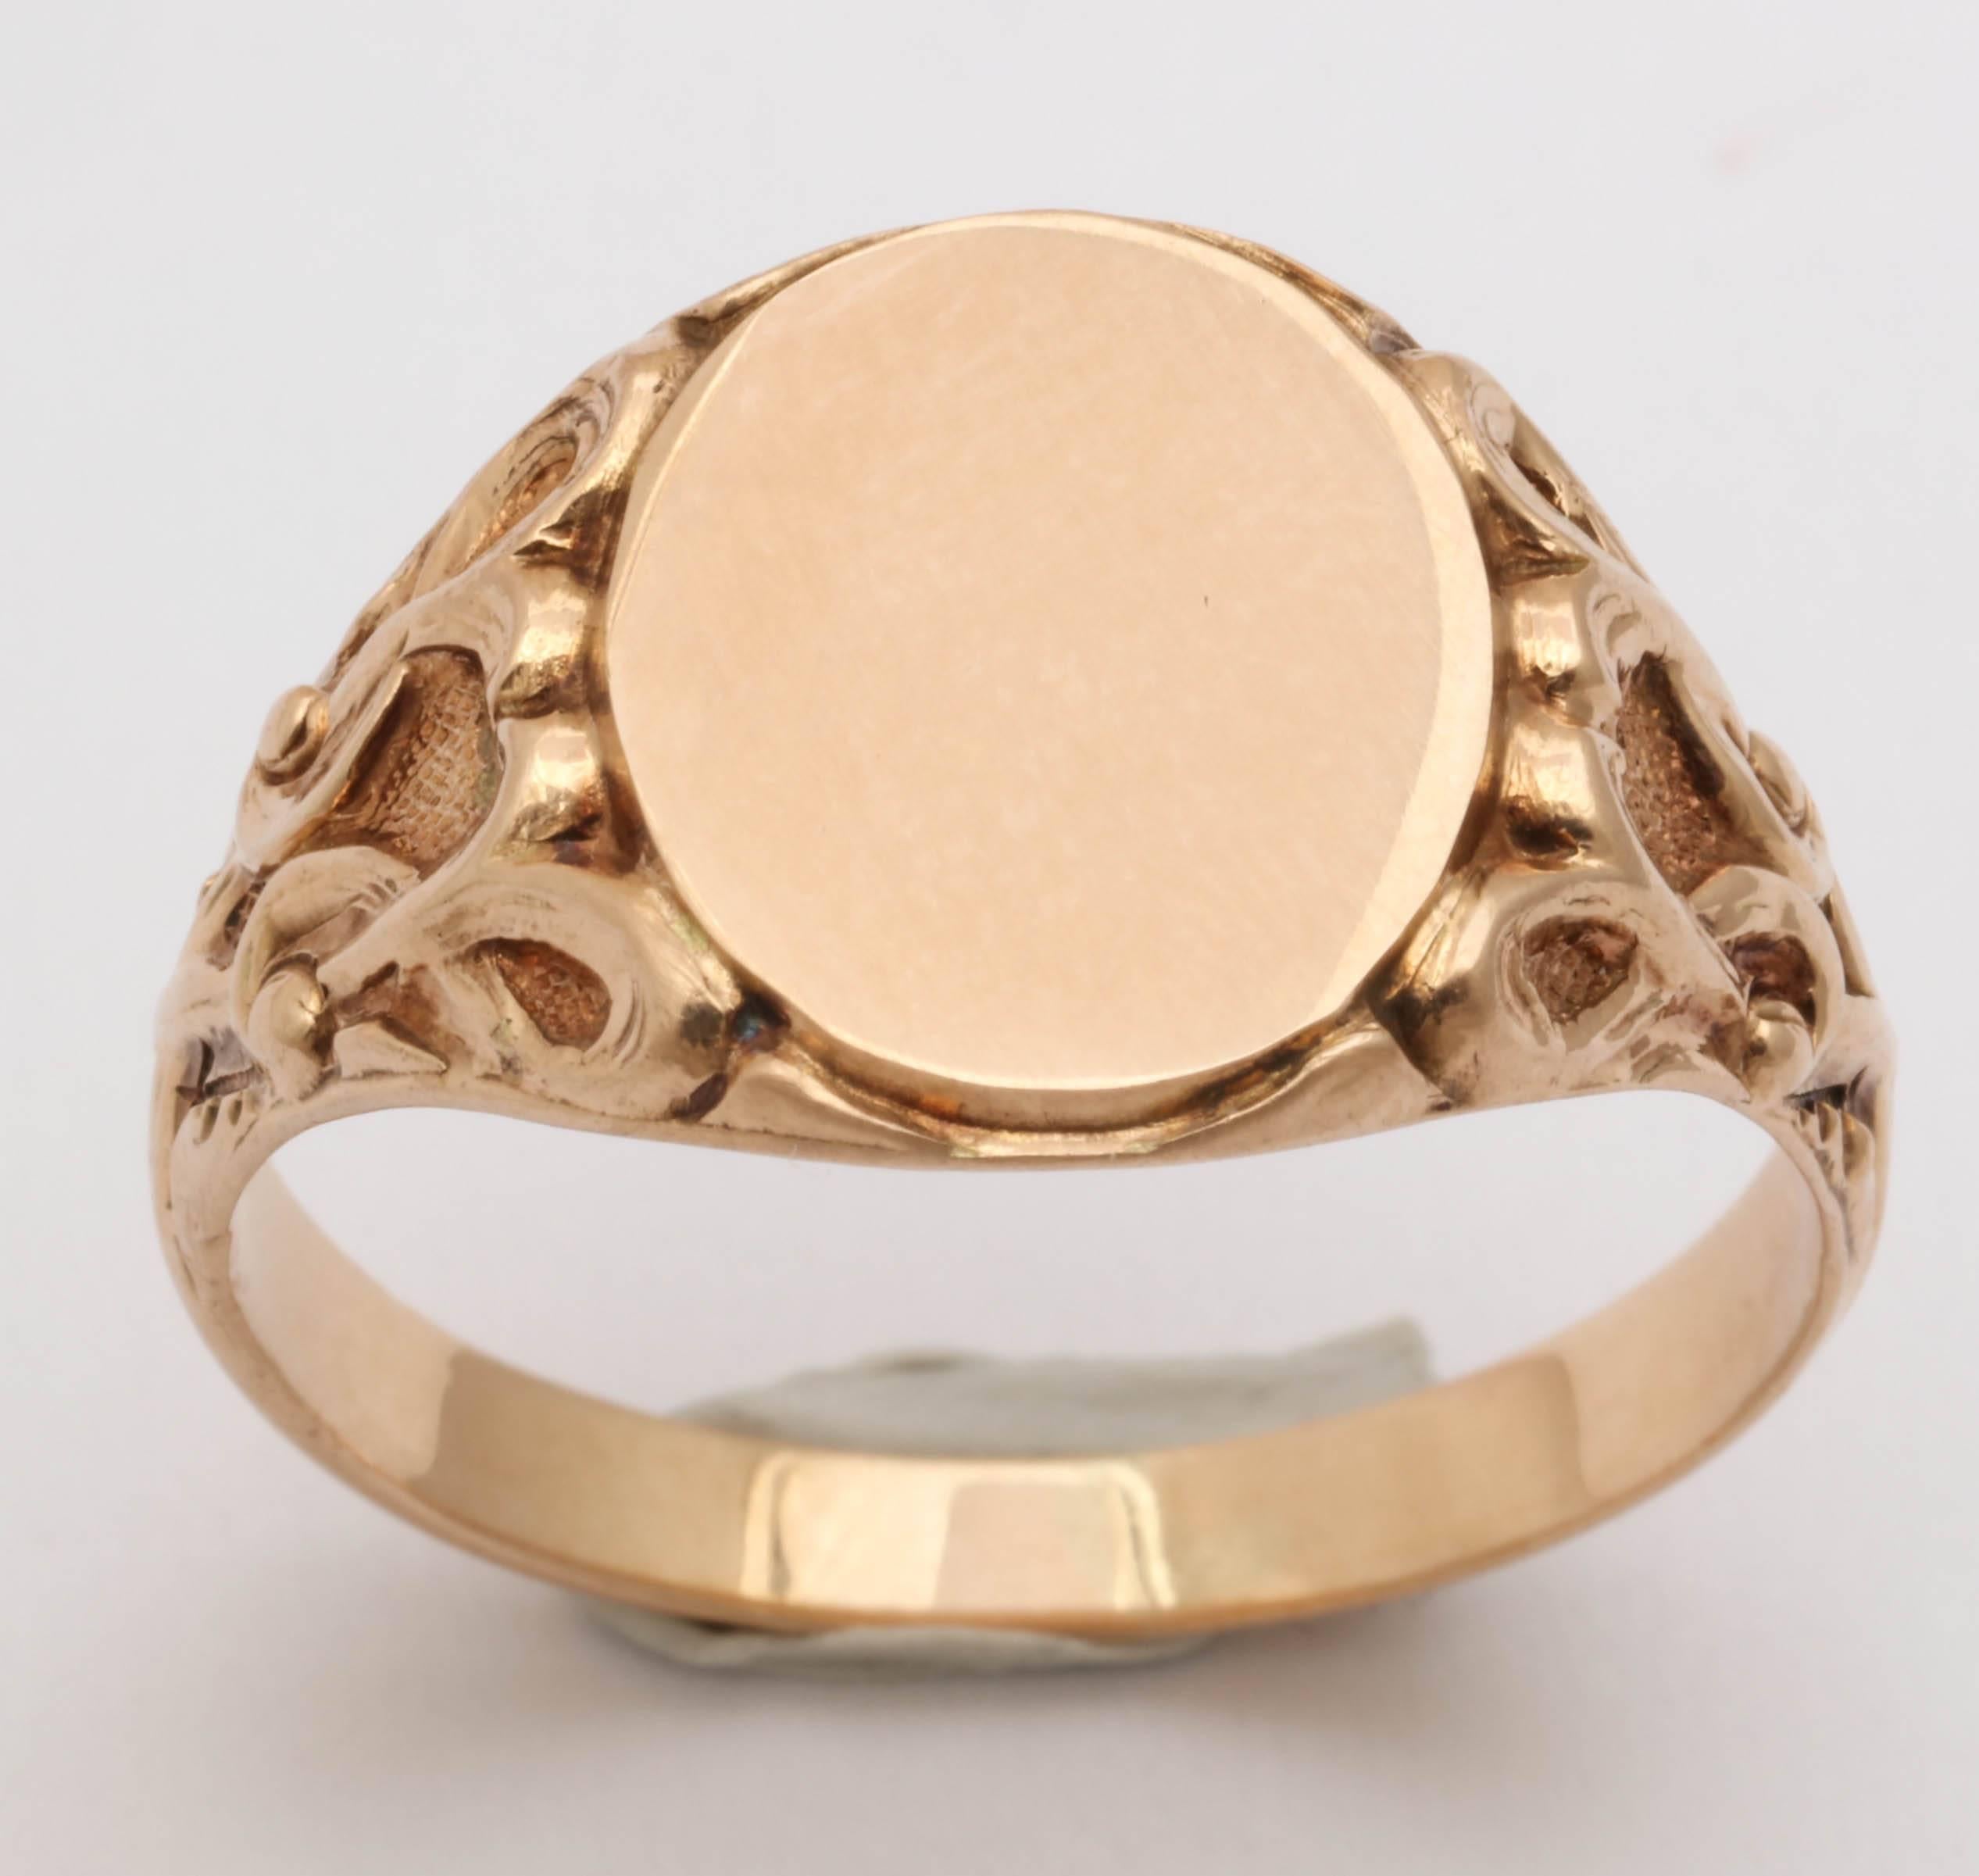 14K gold signet ring with engraved knotwork design on shoulders. Hallmarked 